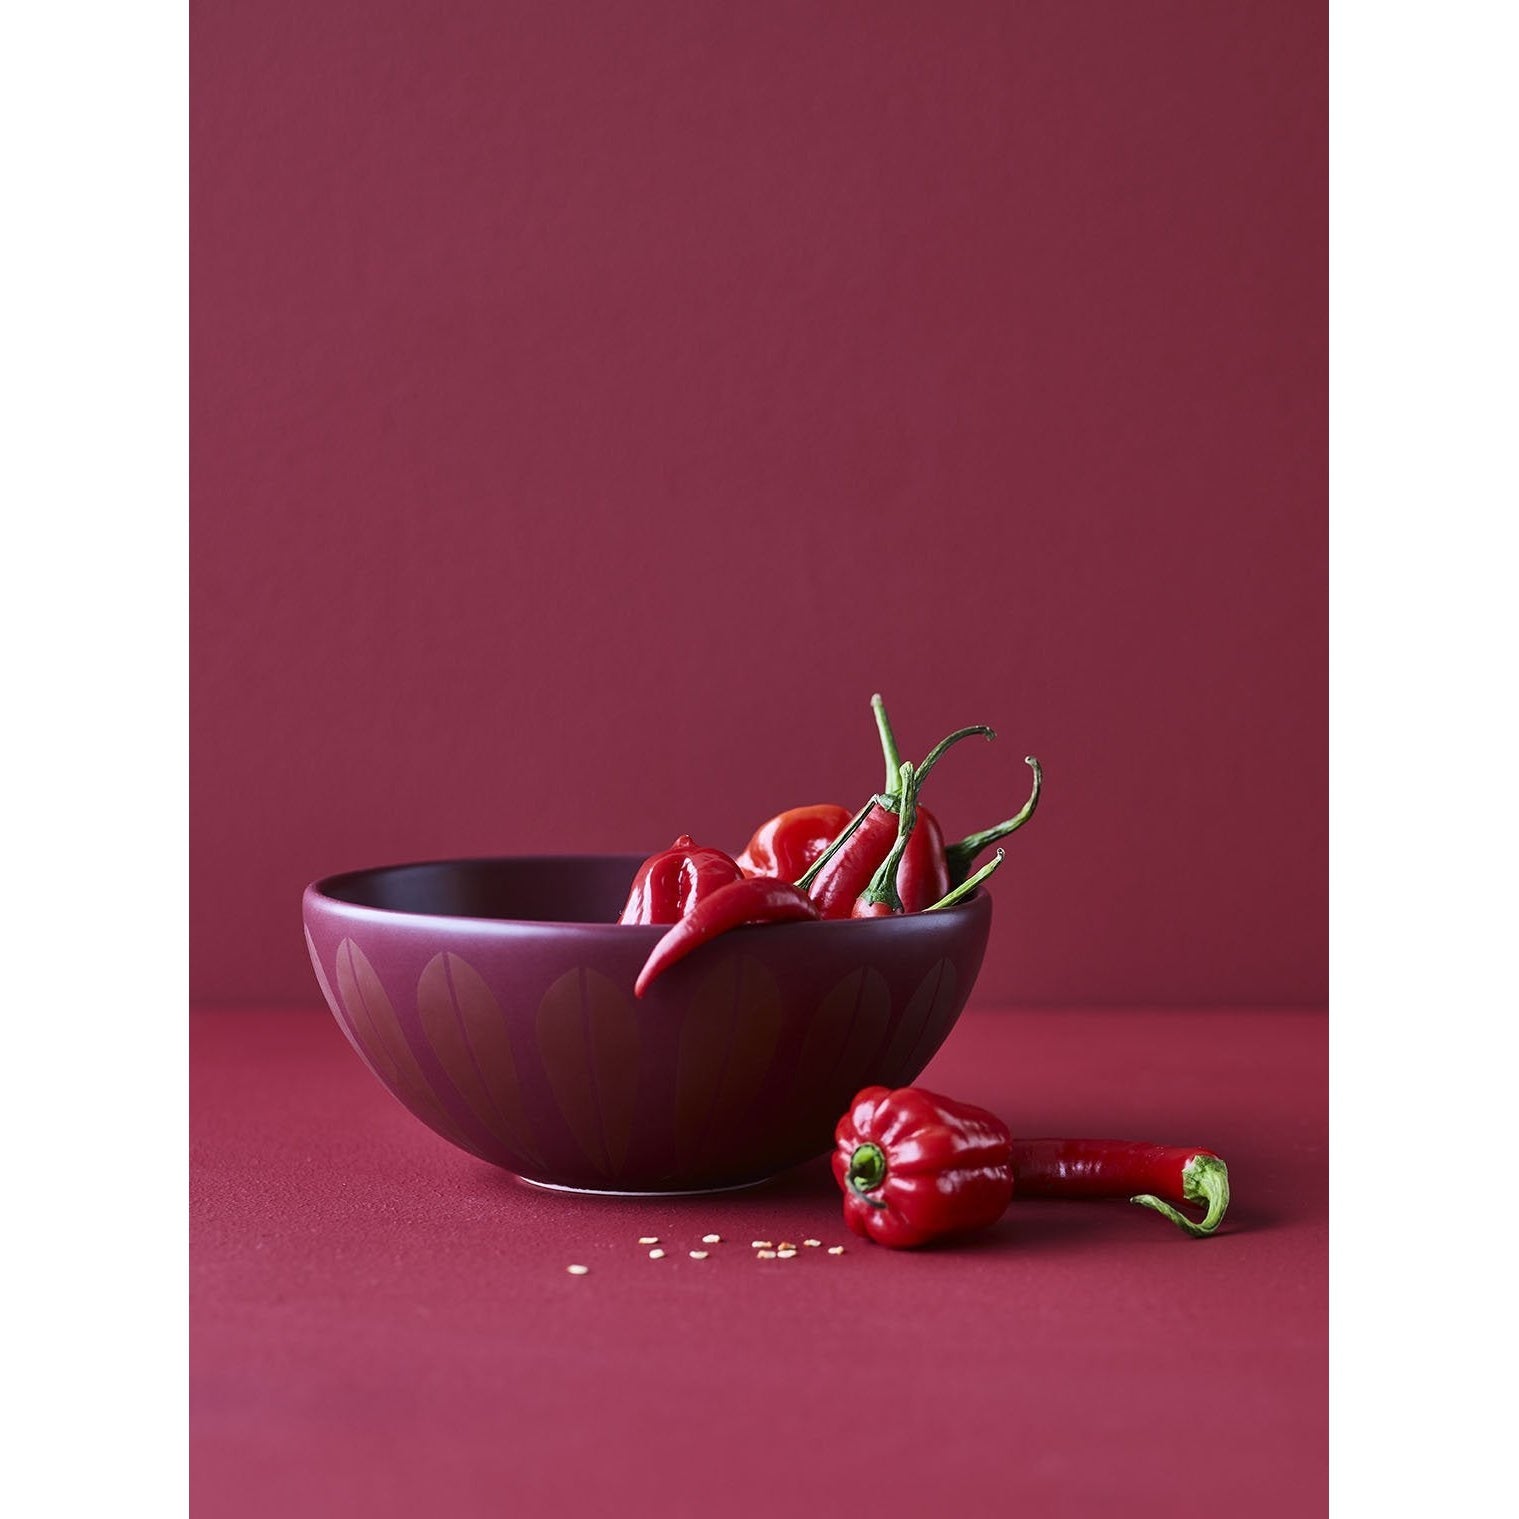 Lucie Kaas Arne Clausen Bowl scuro rosso, 15 cm